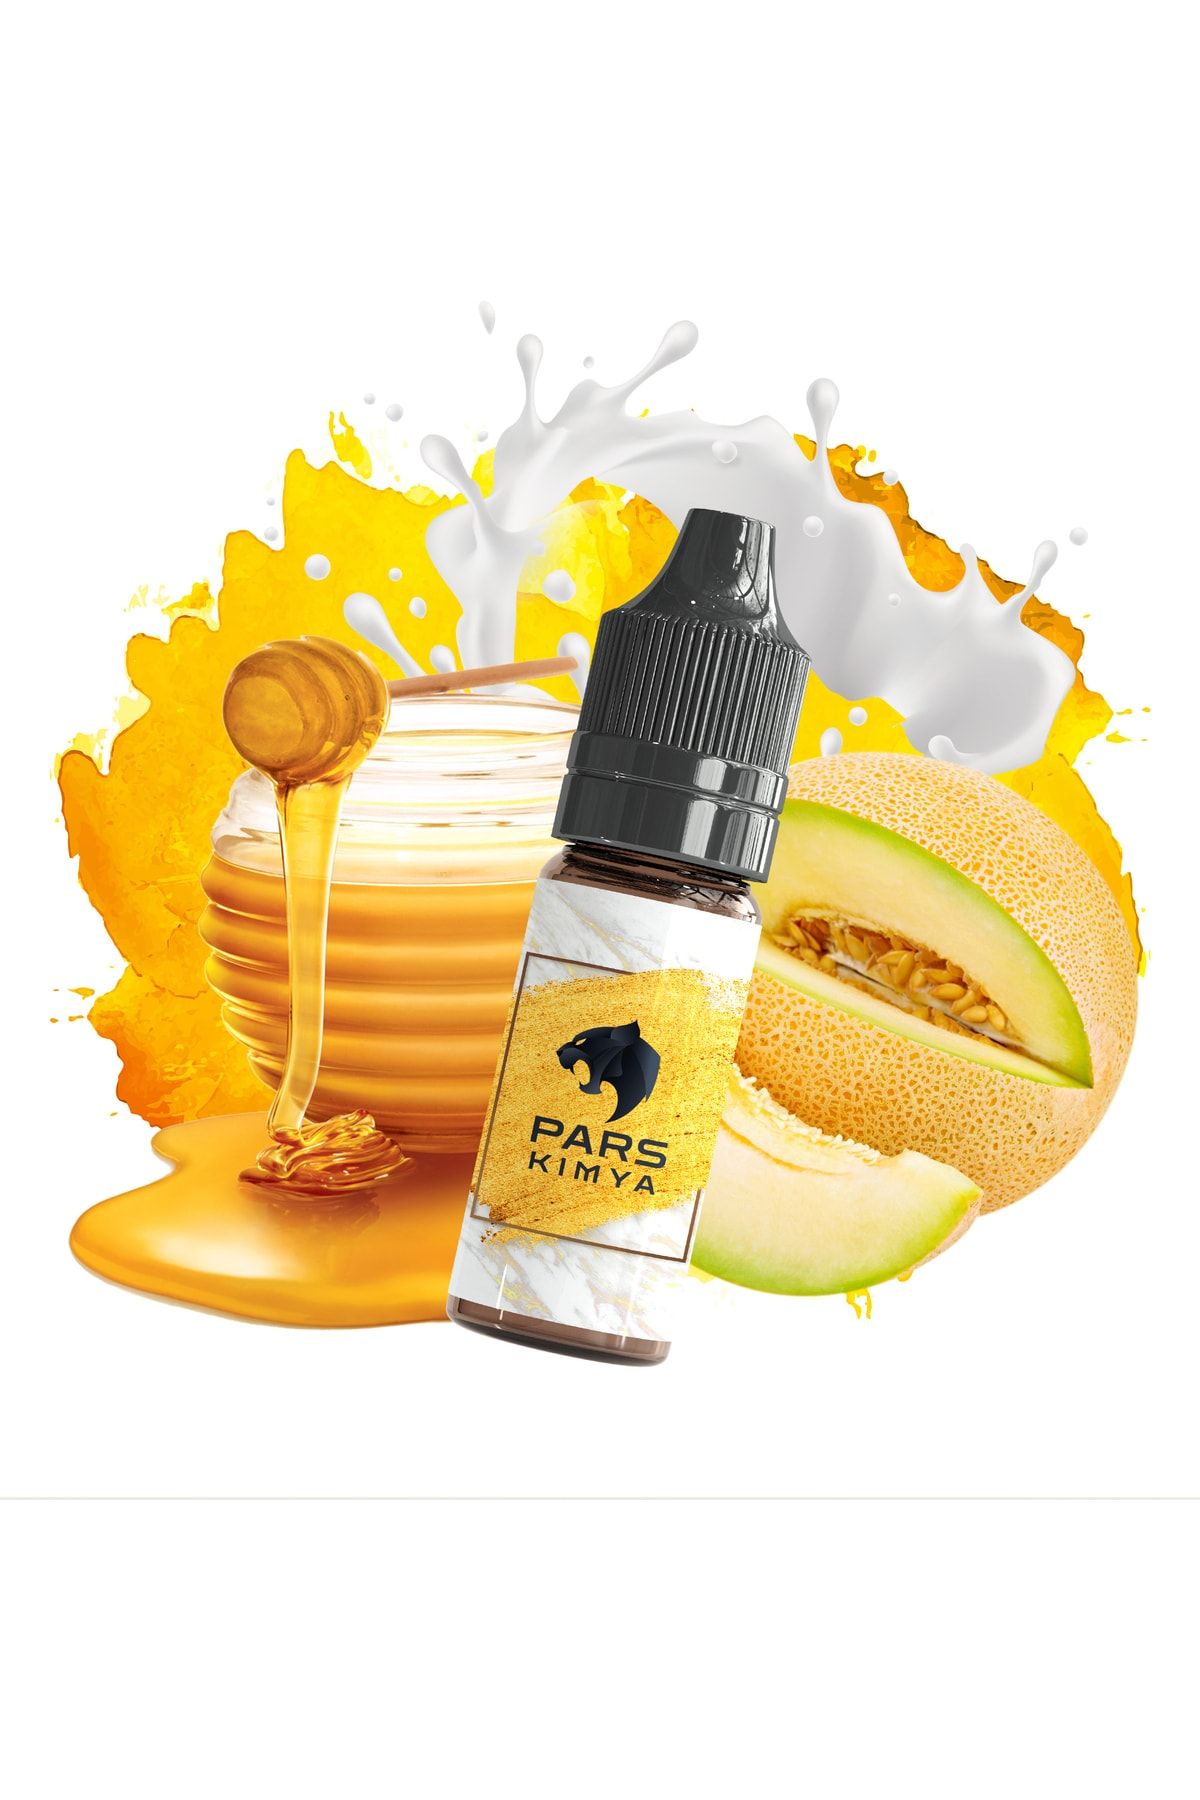 Pars Kimya Honey Tobacco10 Ml Premium Gıda Aroması